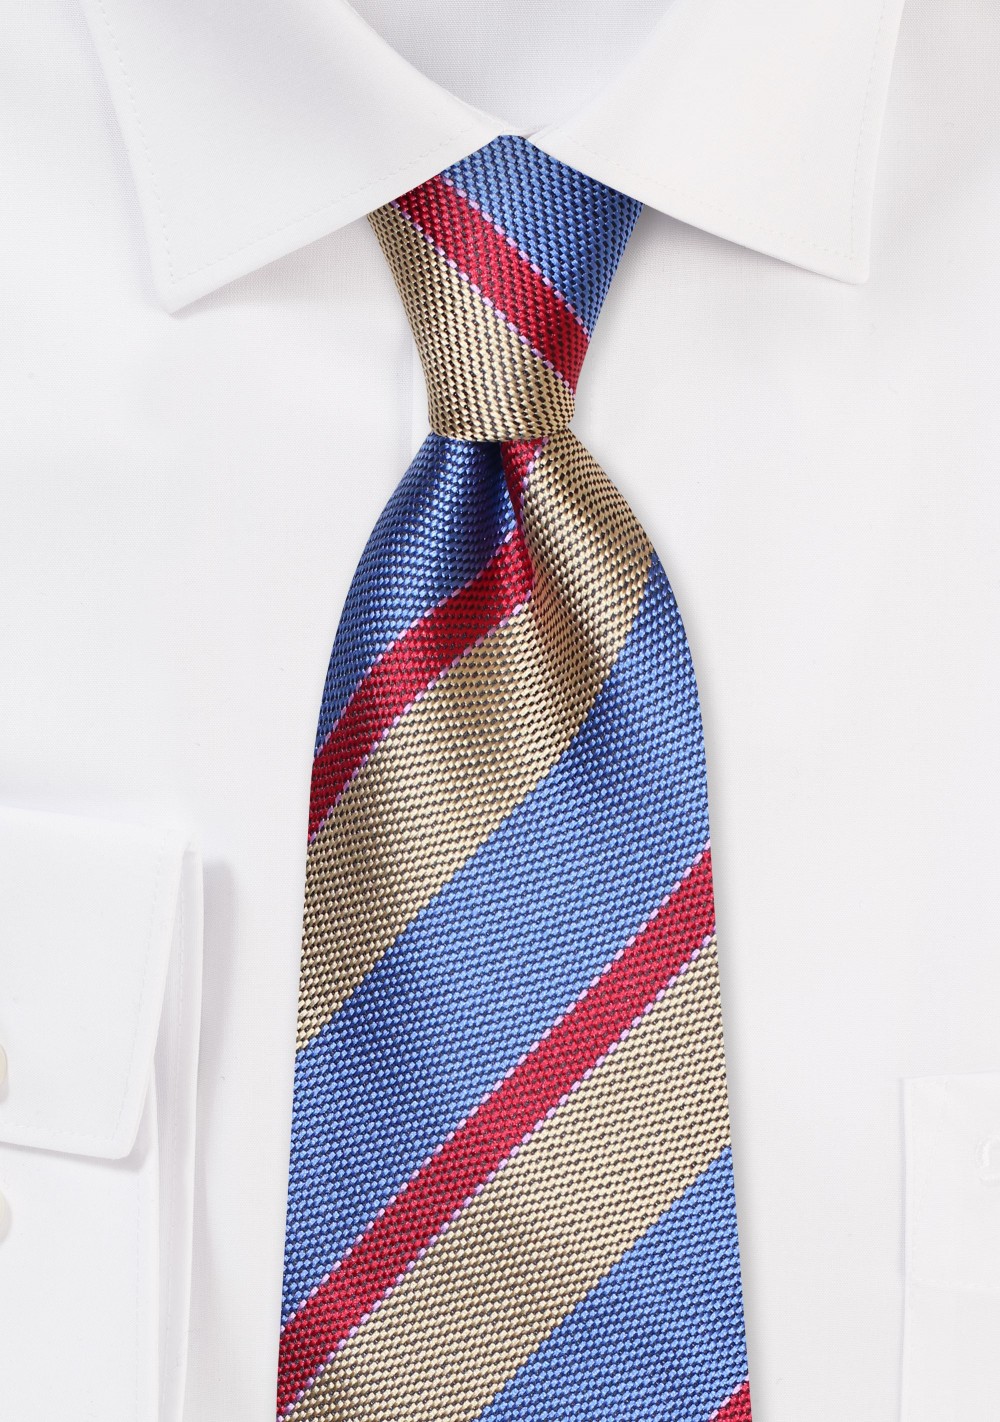 Grenadine Textured Striped Tie in Blue, Gold, Red